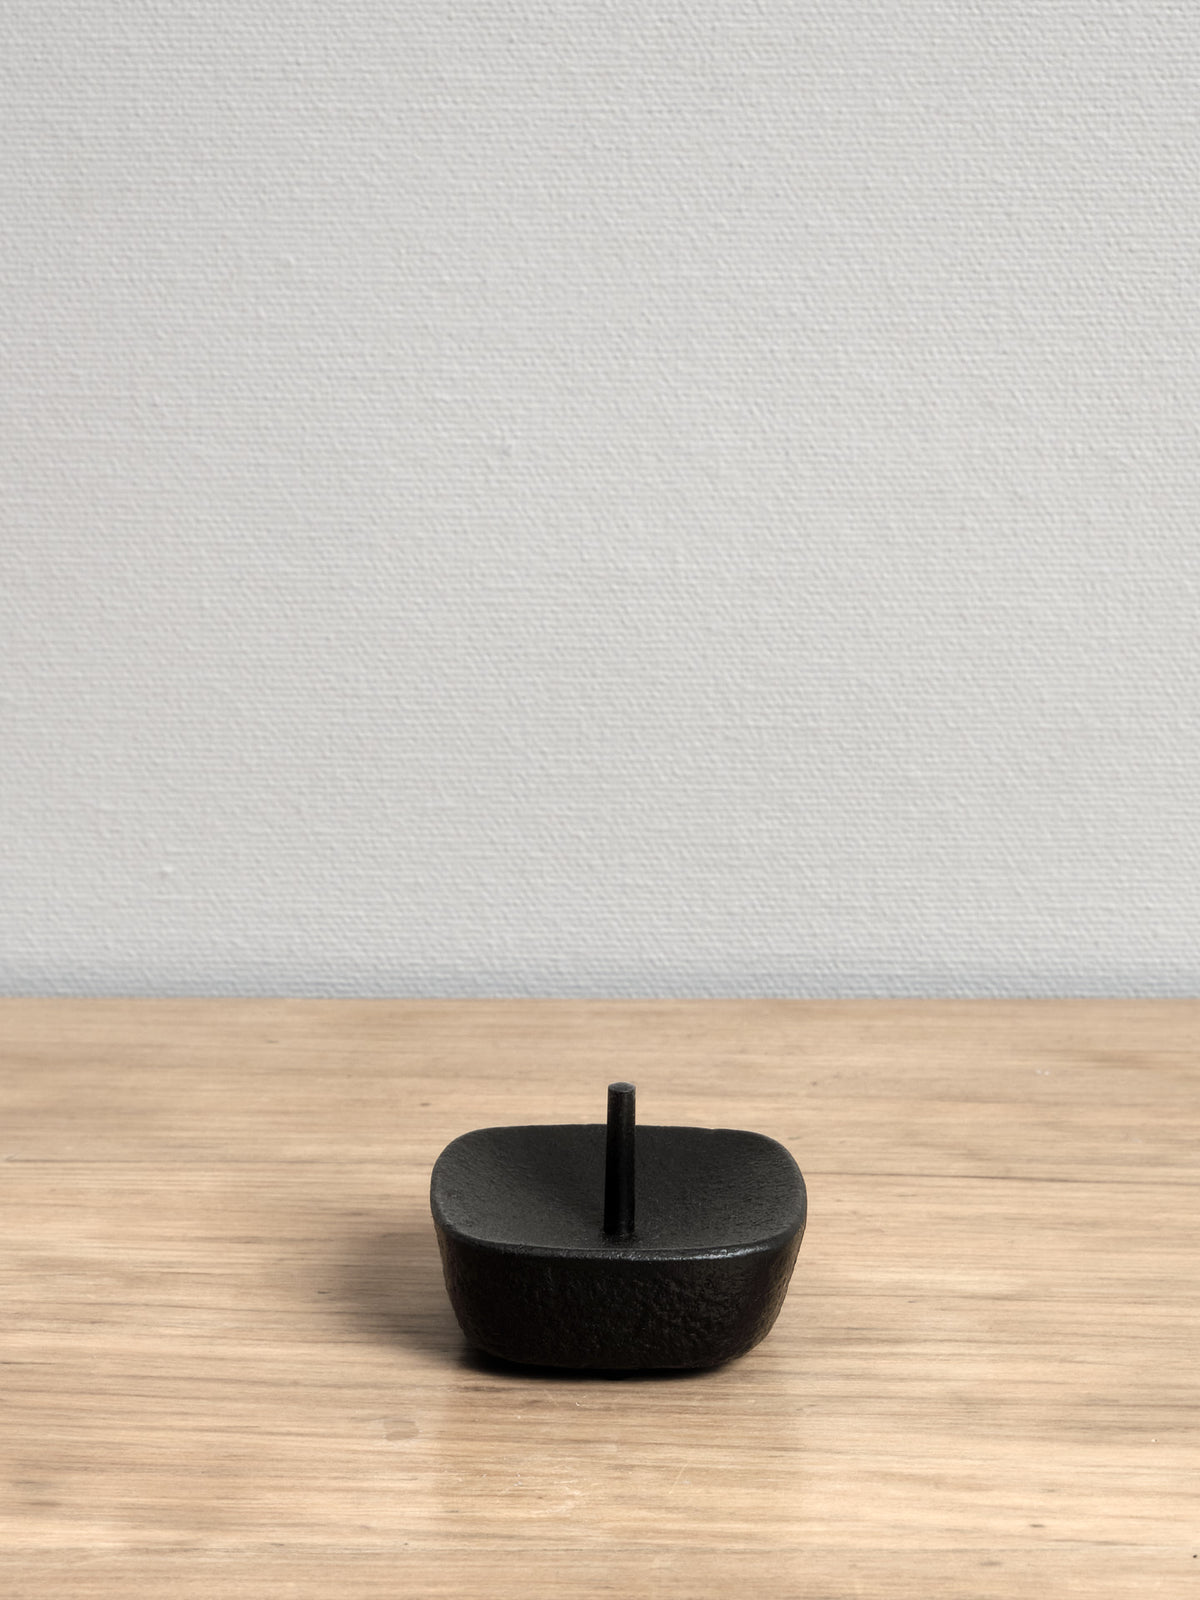 A Takazawa medium Koma Iron Candle Stand sitting on top of a wooden table.